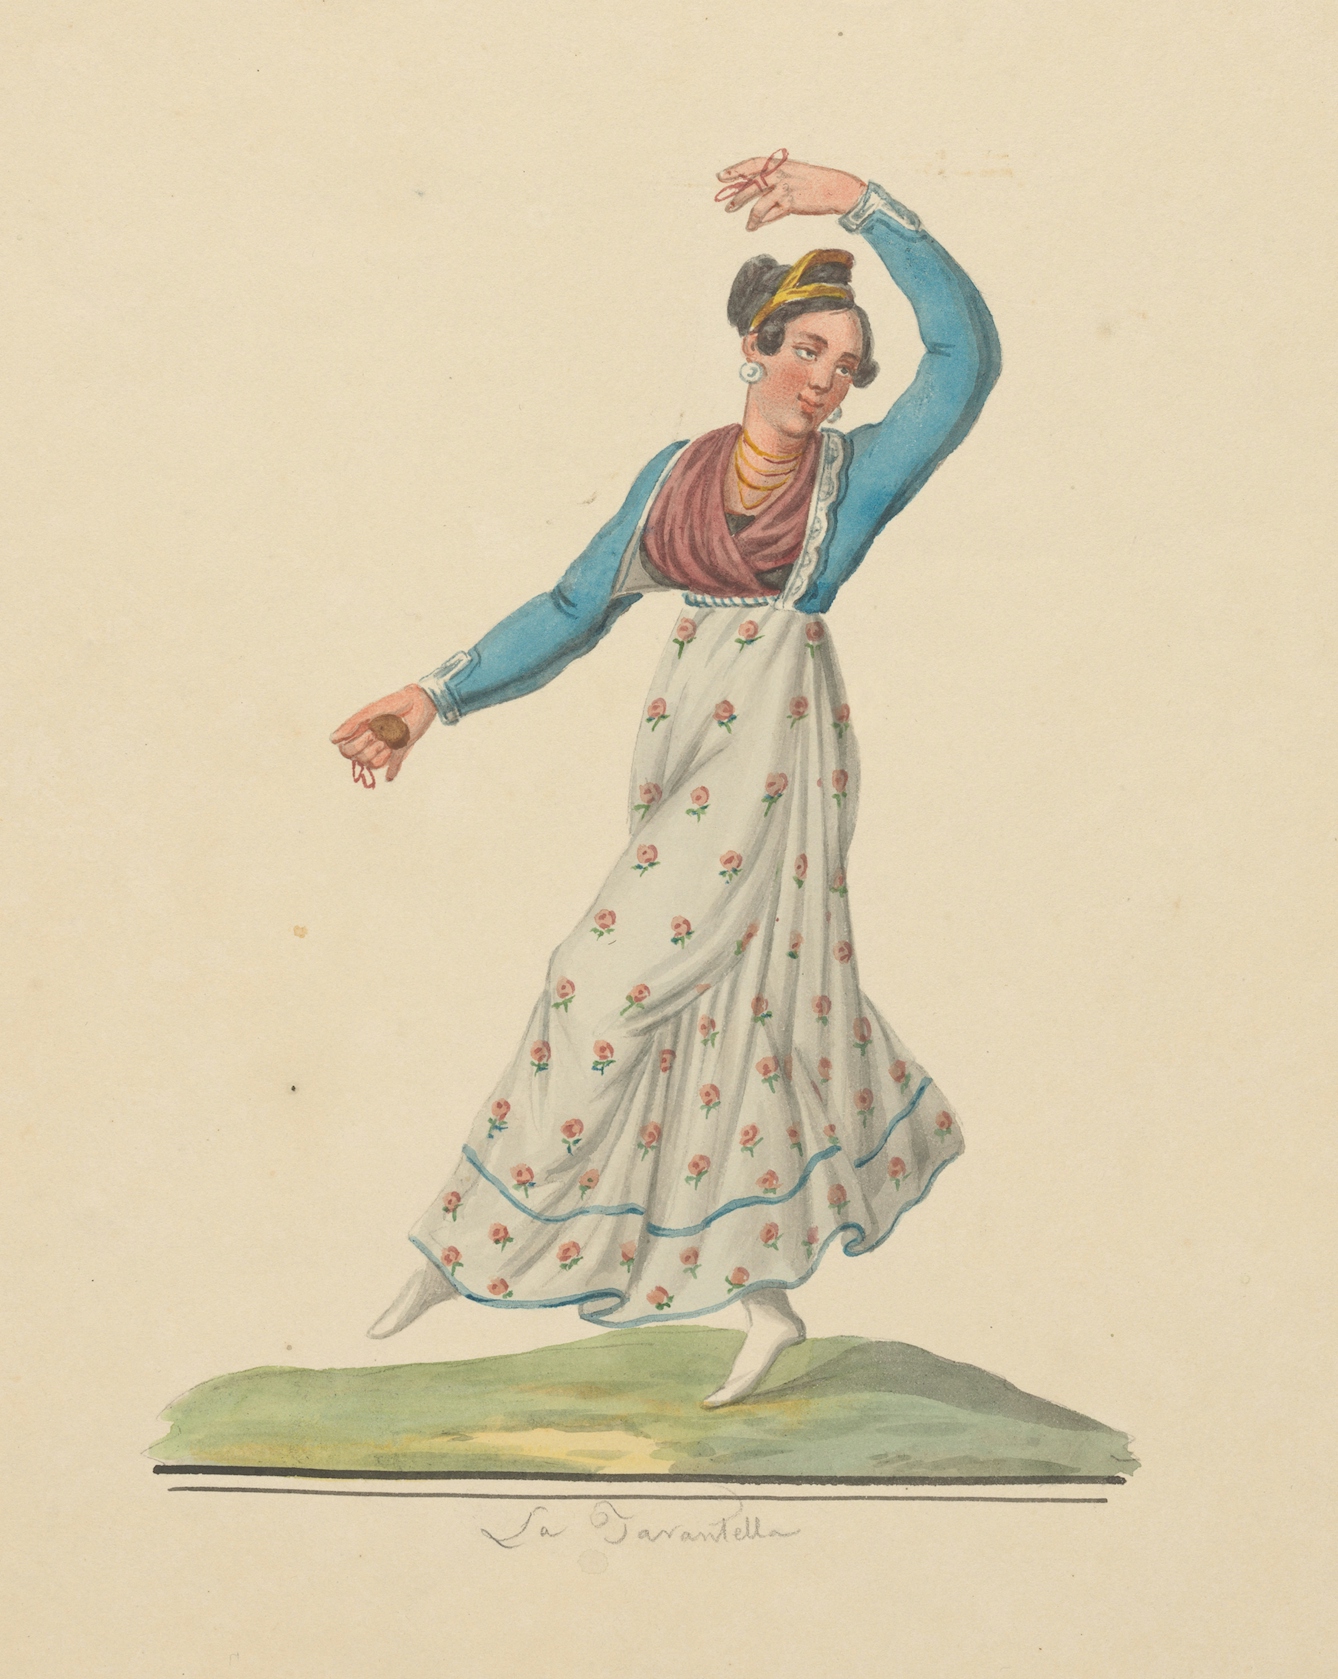 Image of lady dancing, wearing long skirt.